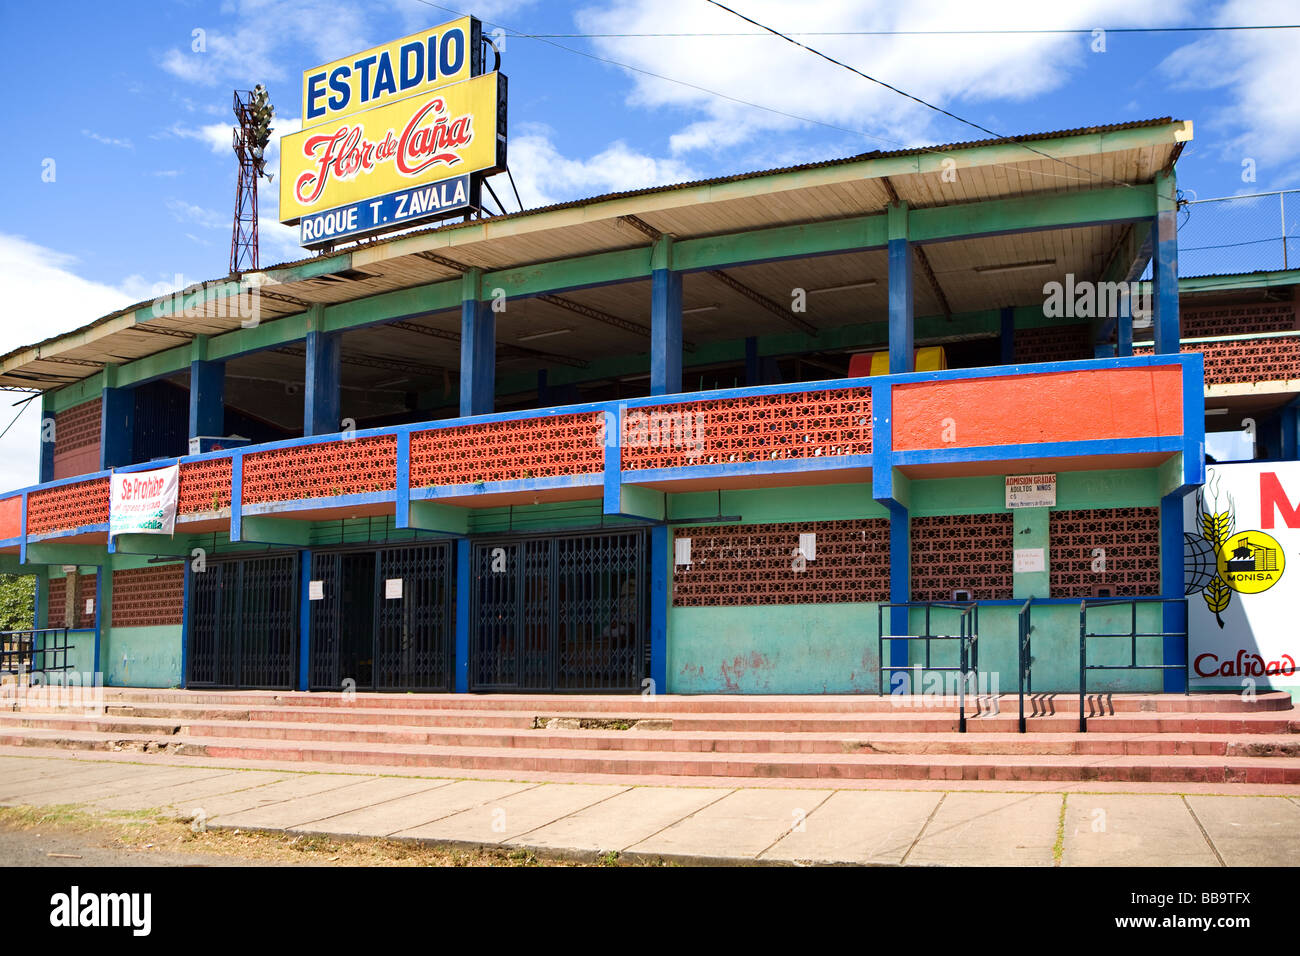 Estadio Flor de Cana Roque T Zavala home of the Granada Tiburones Granada Nicaragua Stock Photo